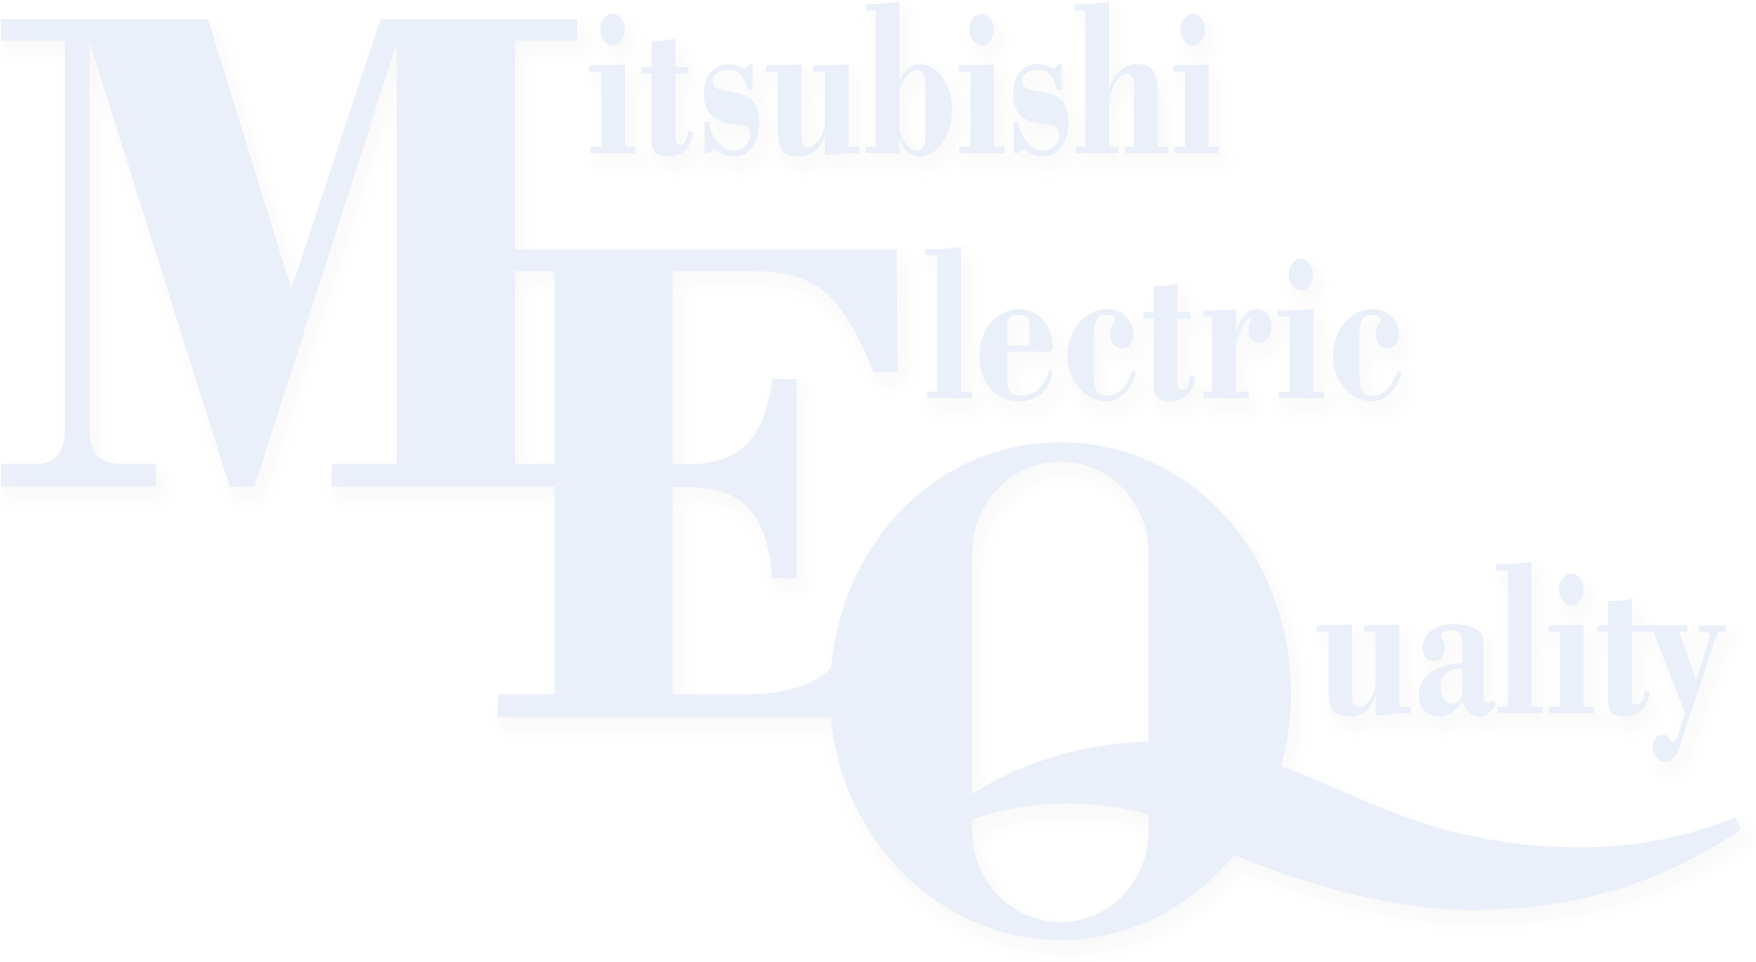 Mitsubishi Electric Quality.